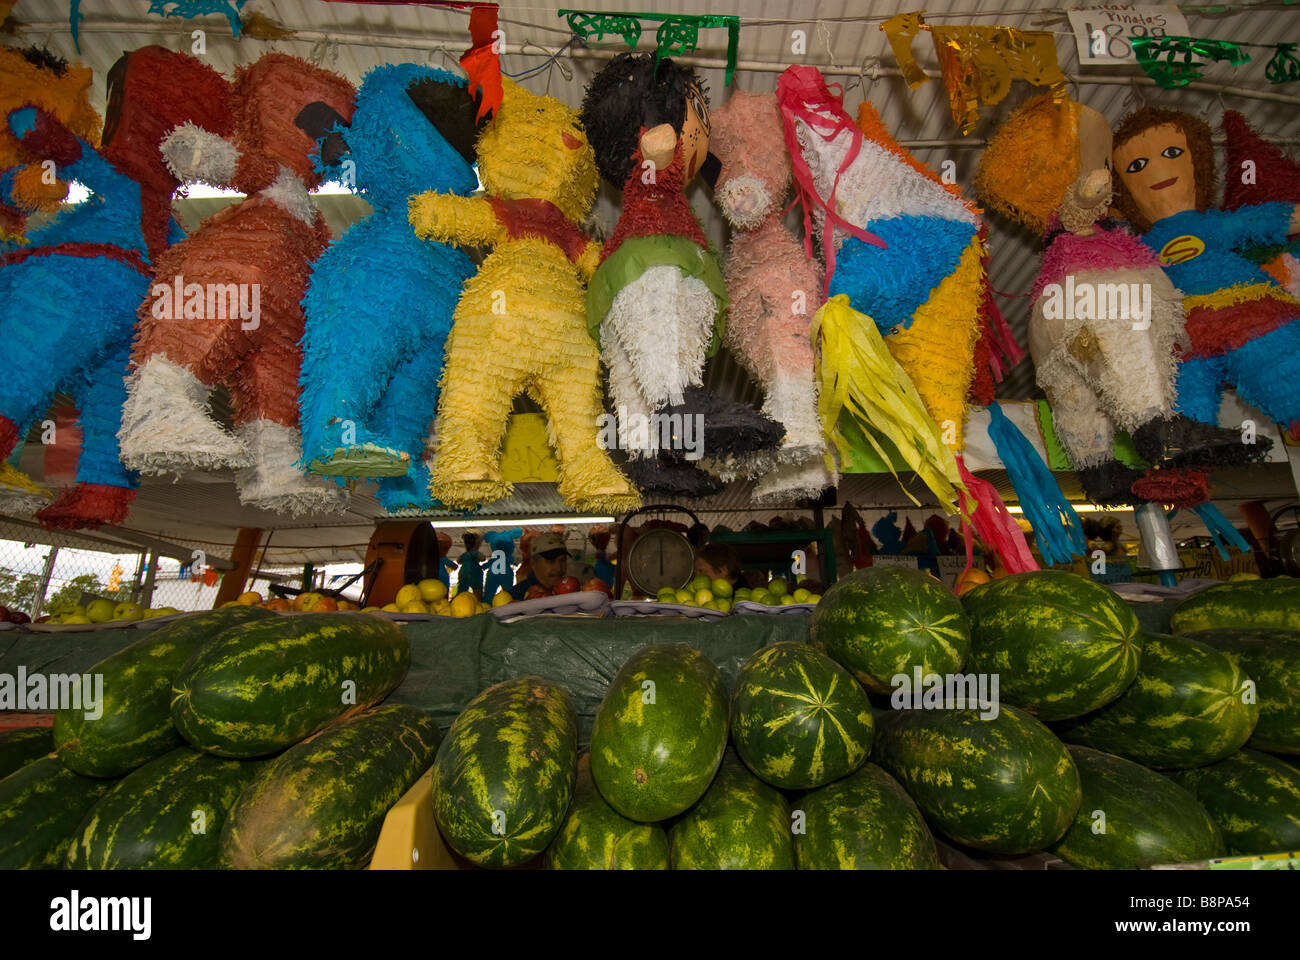 Outdoor market watermelons pinatas hanging from ceiling San Antonio texas tx Stock Photo